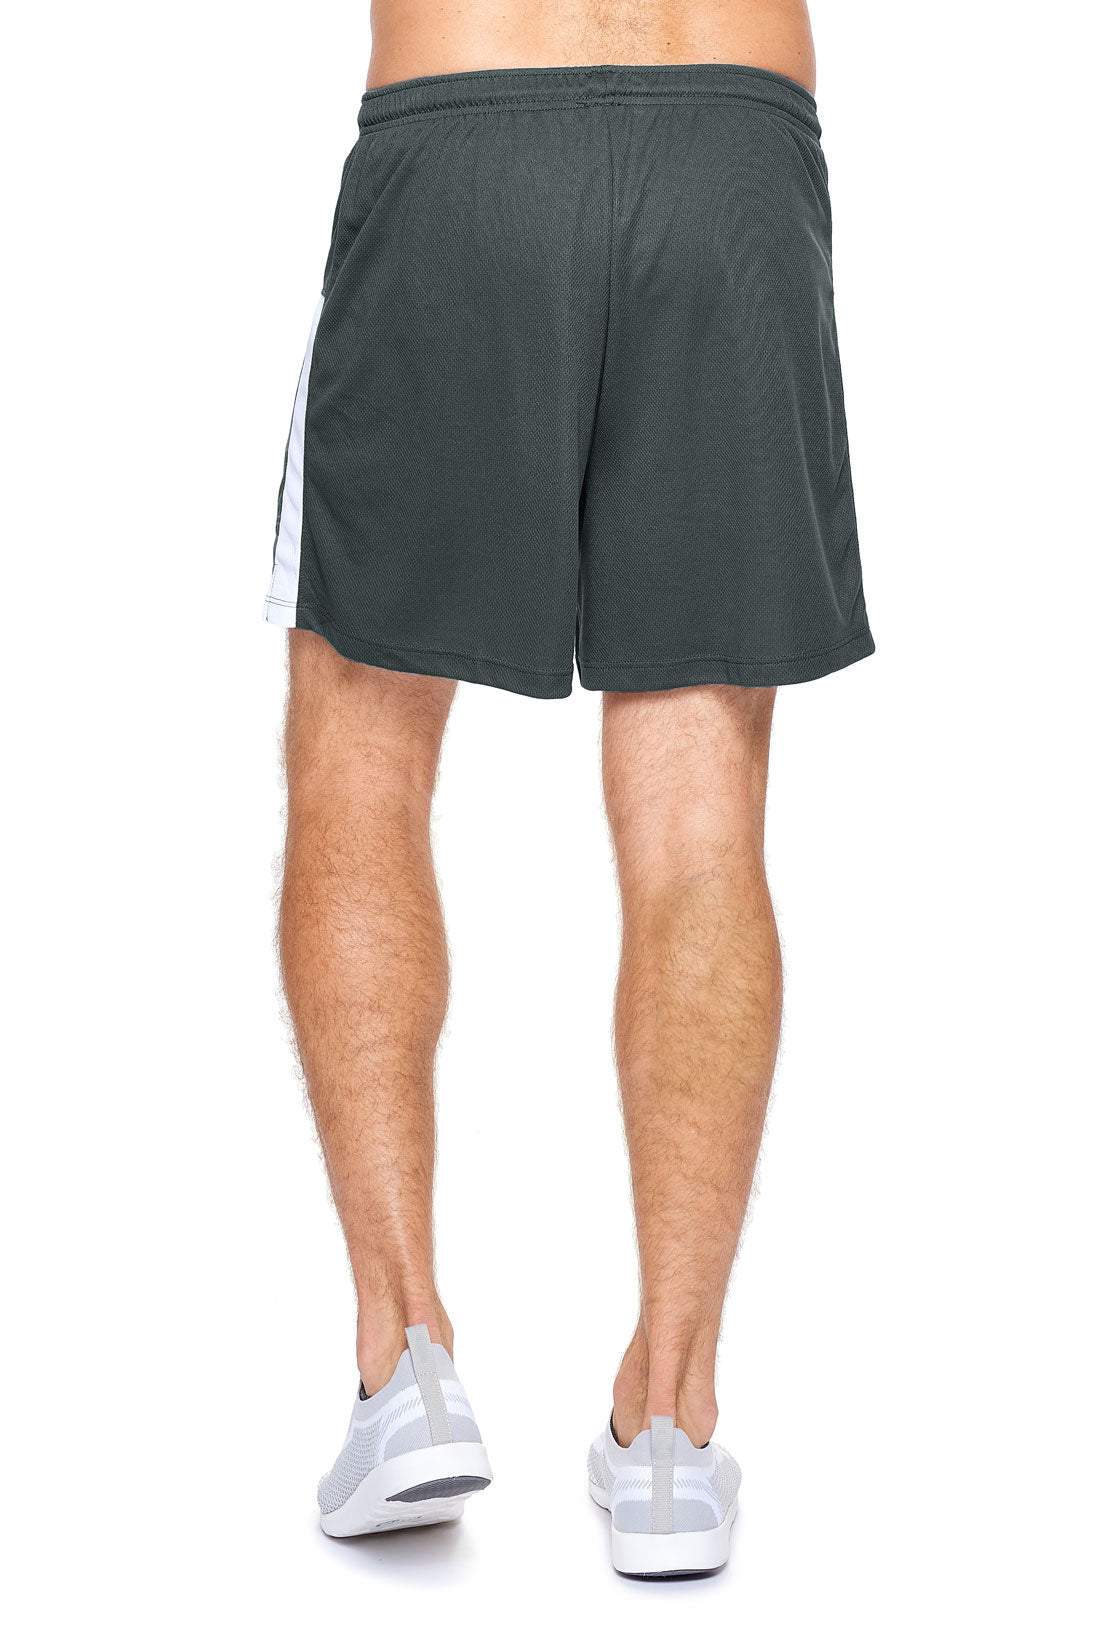 AJ1090🇺🇸 Oxymesh™ Premium Shorts - Expert Brand #GRAPHITE